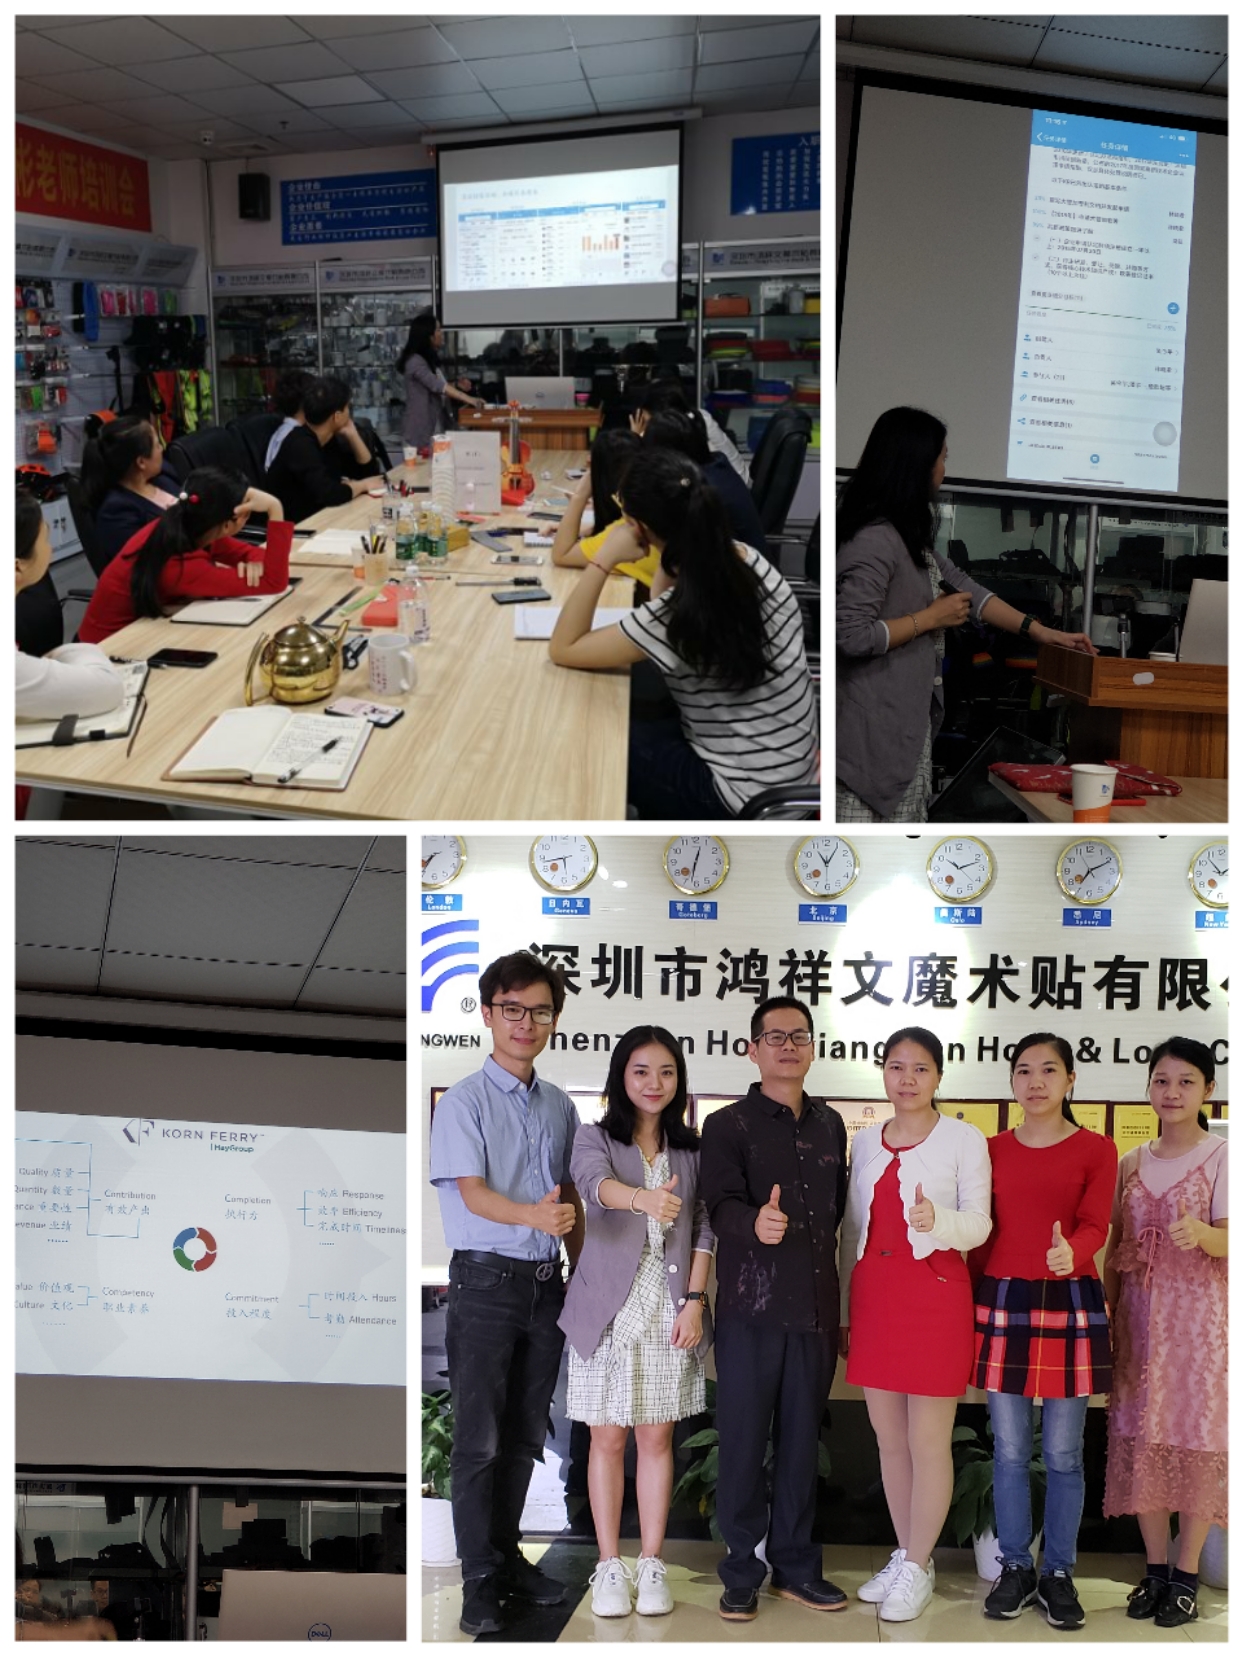 Hongxiangwen corporate culture  learning